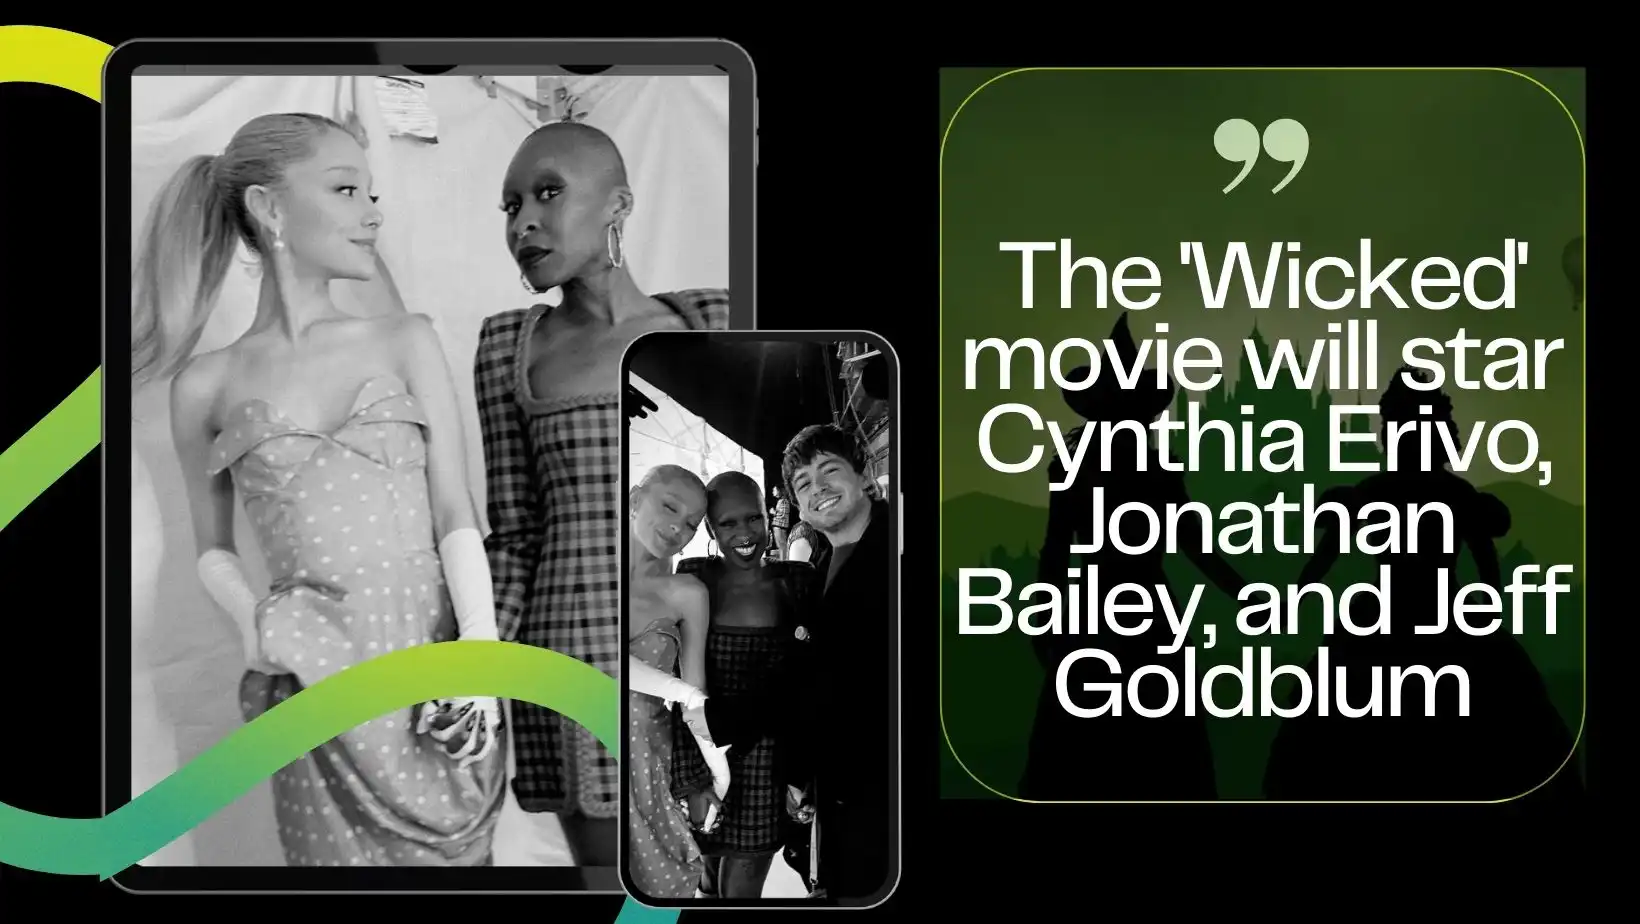 The 'Wicked' movie will star Cynthia Erivo, Jonathan Bailey, and Jeff Goldblum